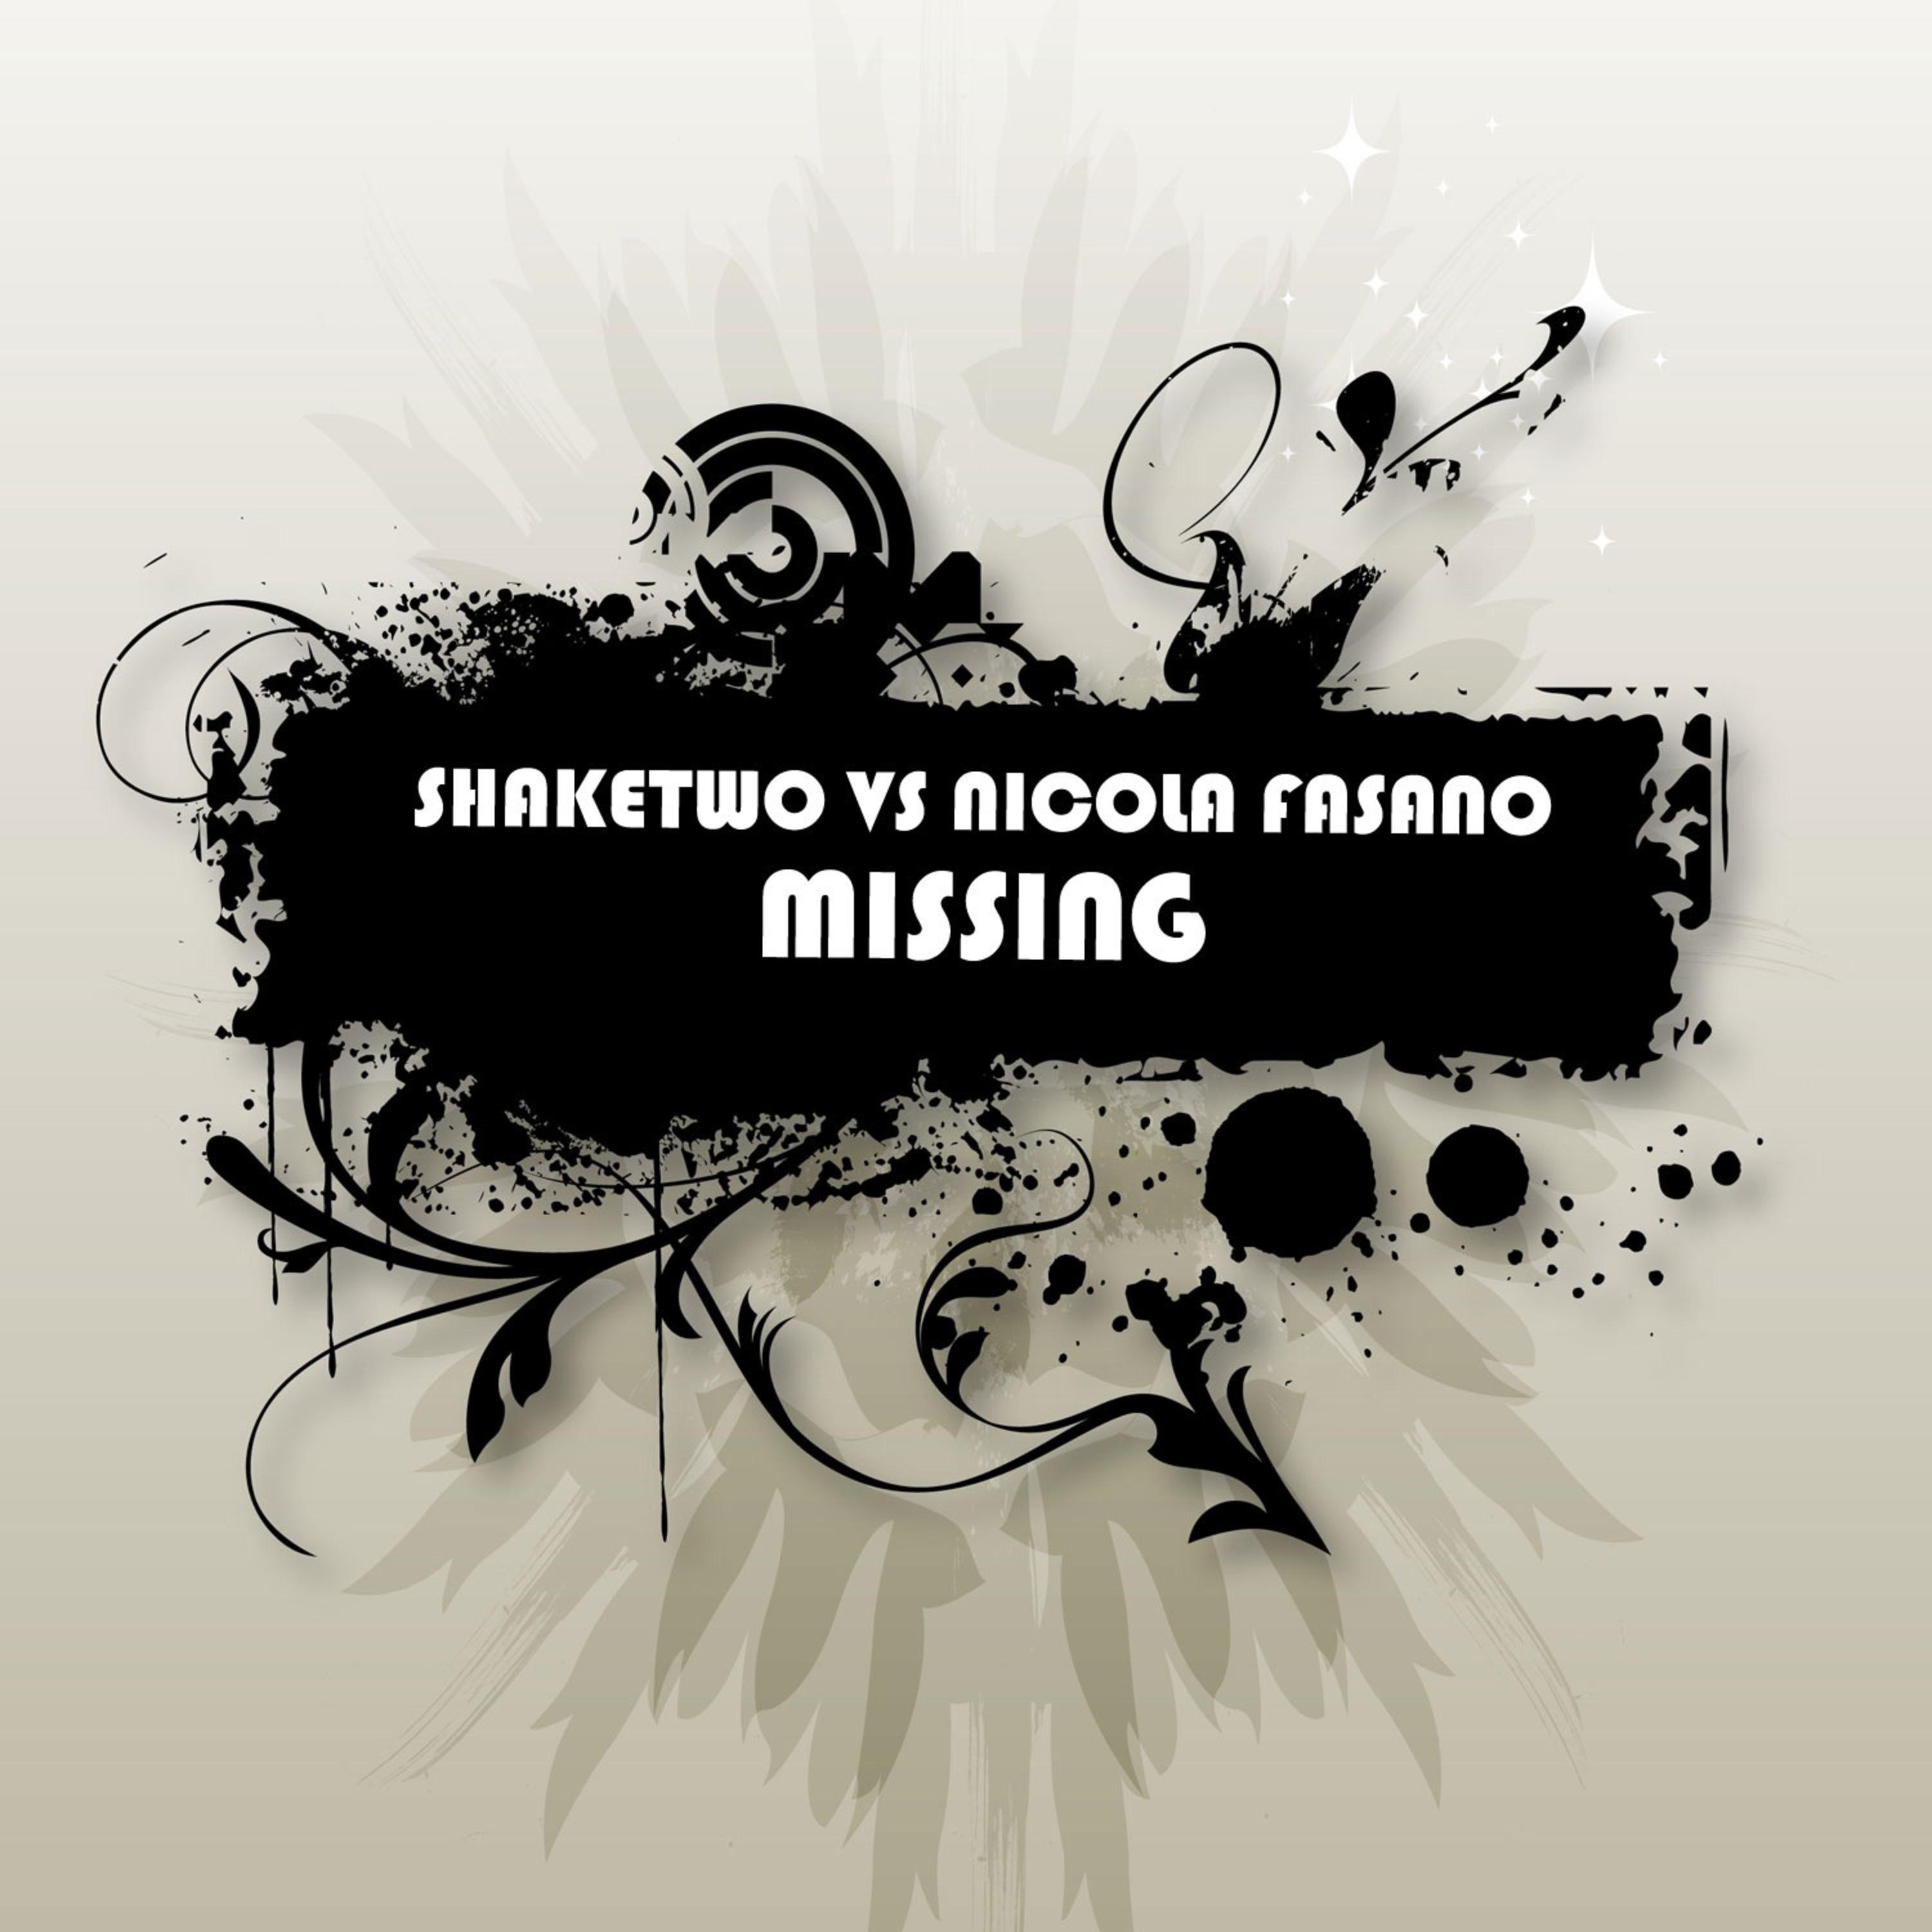 Missing (Video Version)